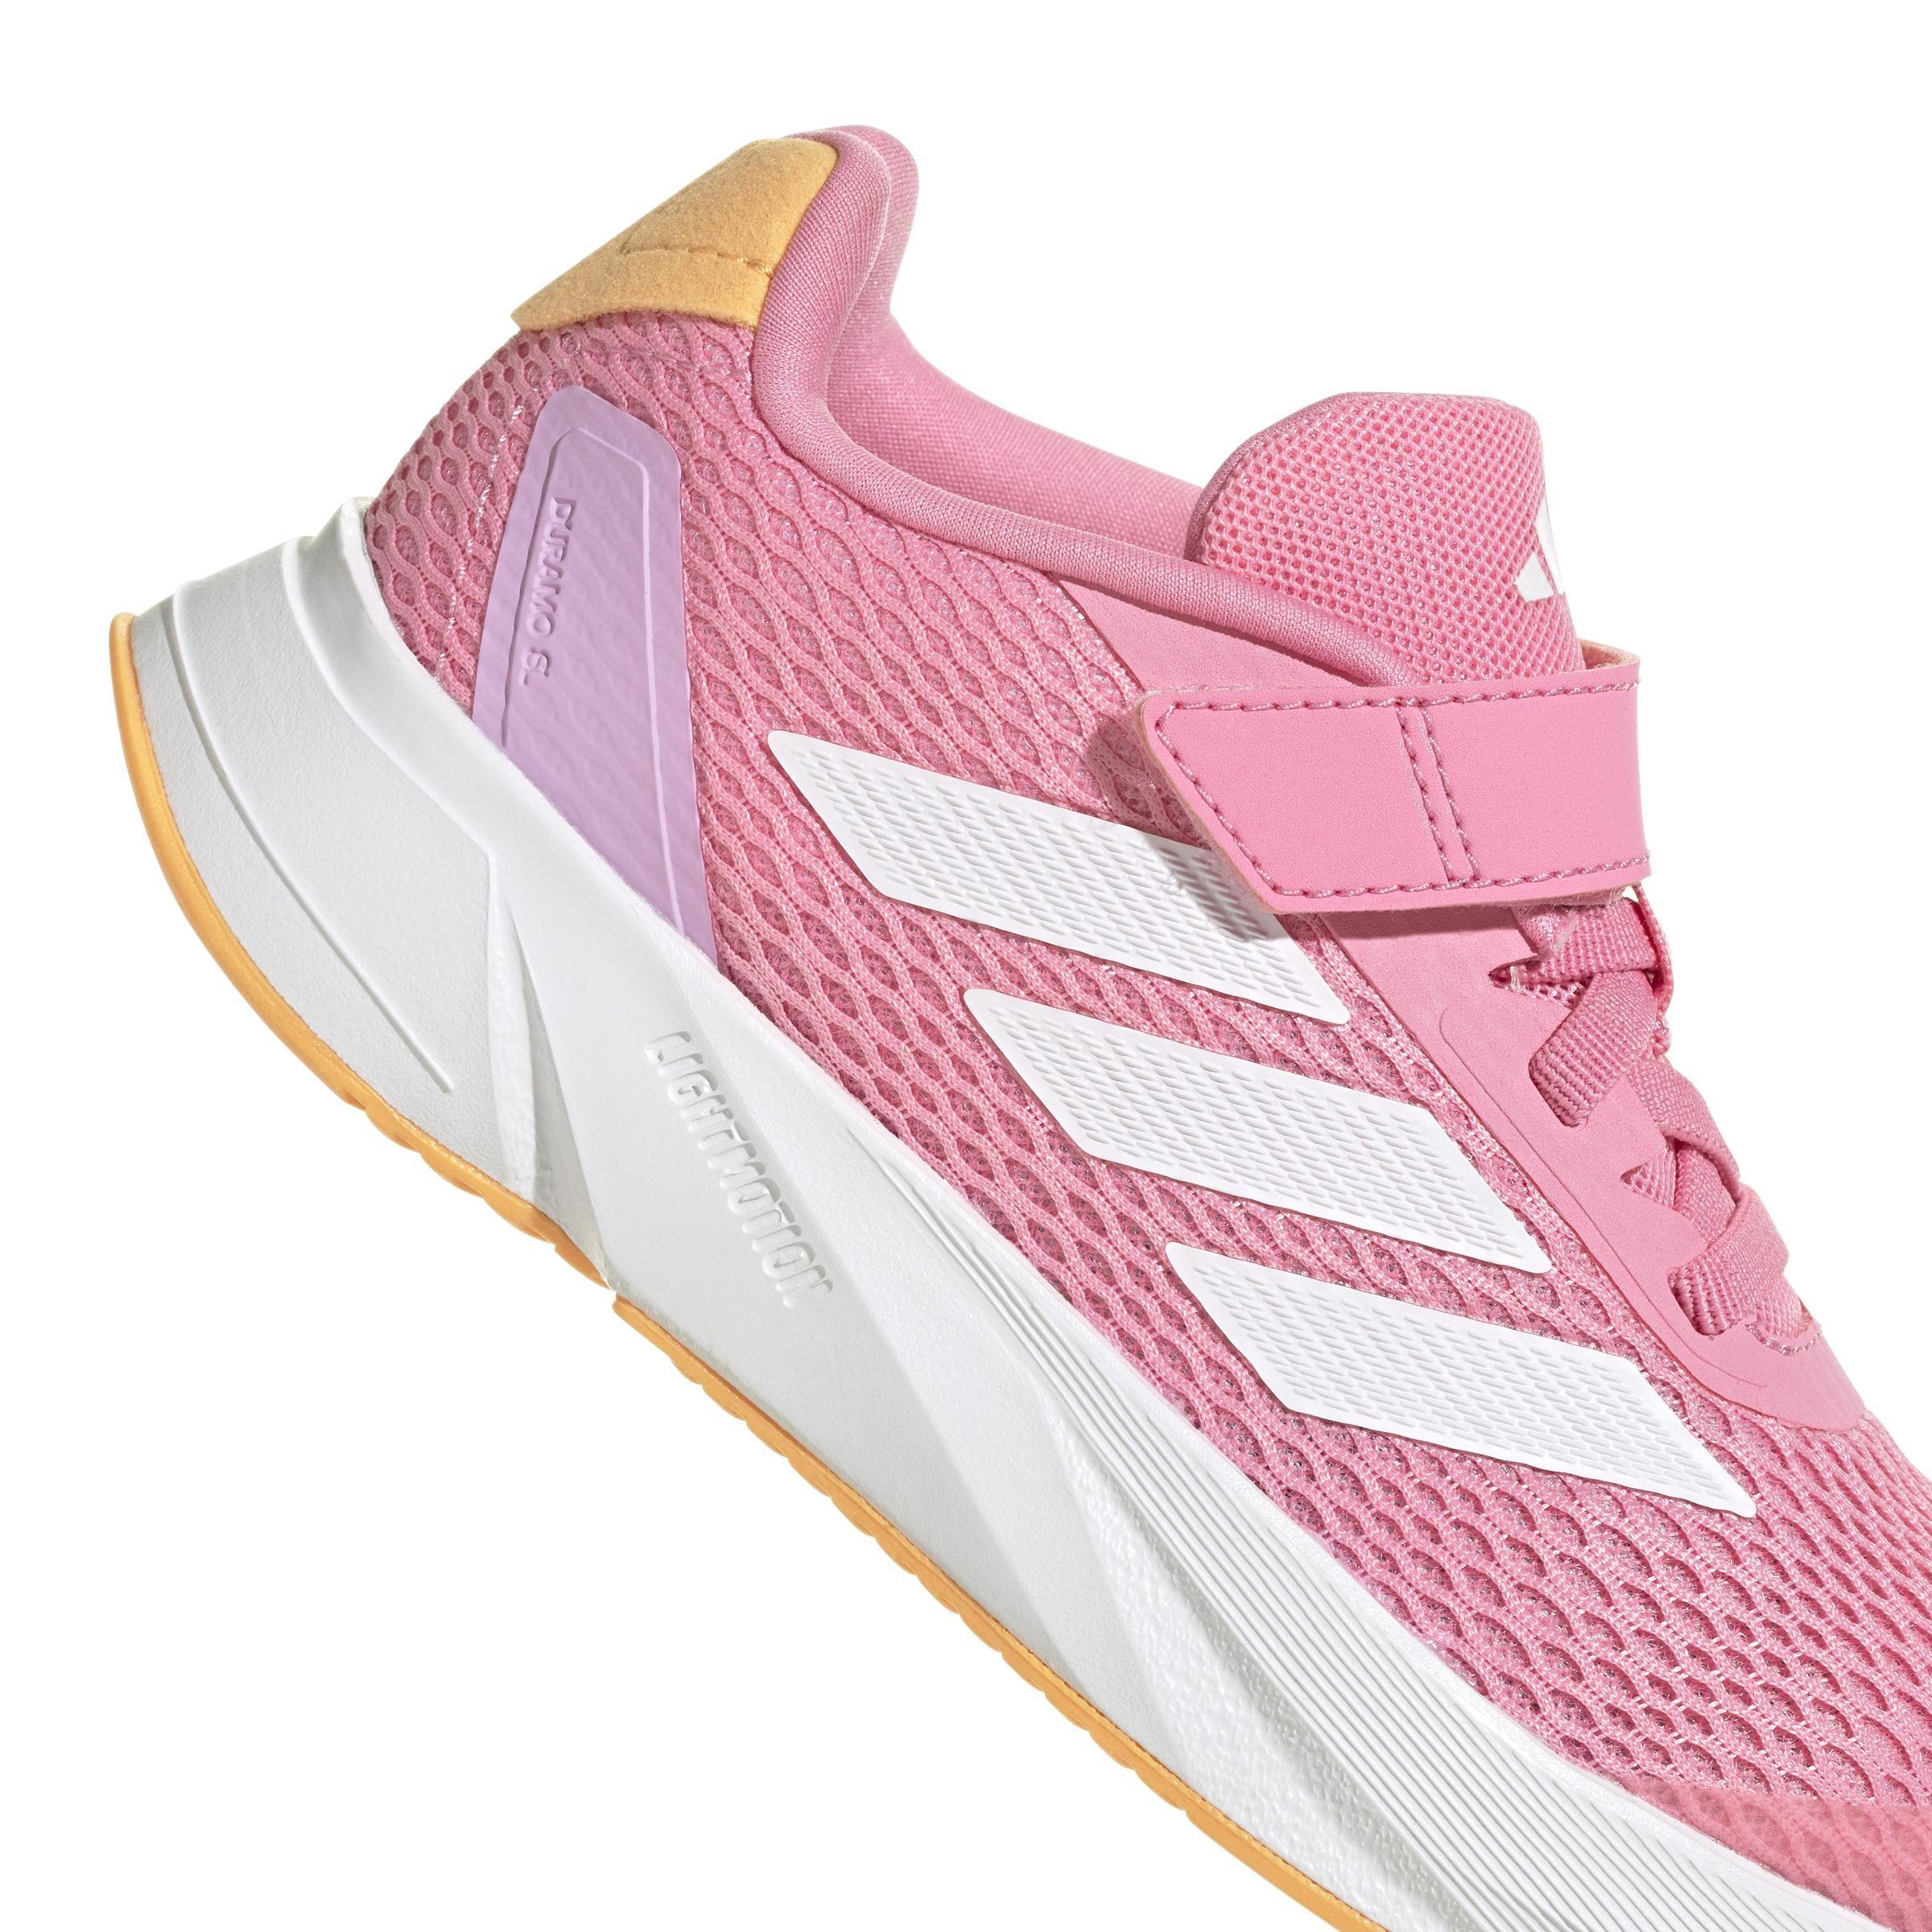 adidas - Unisex Kids Duramo Sl Shoes, Pink